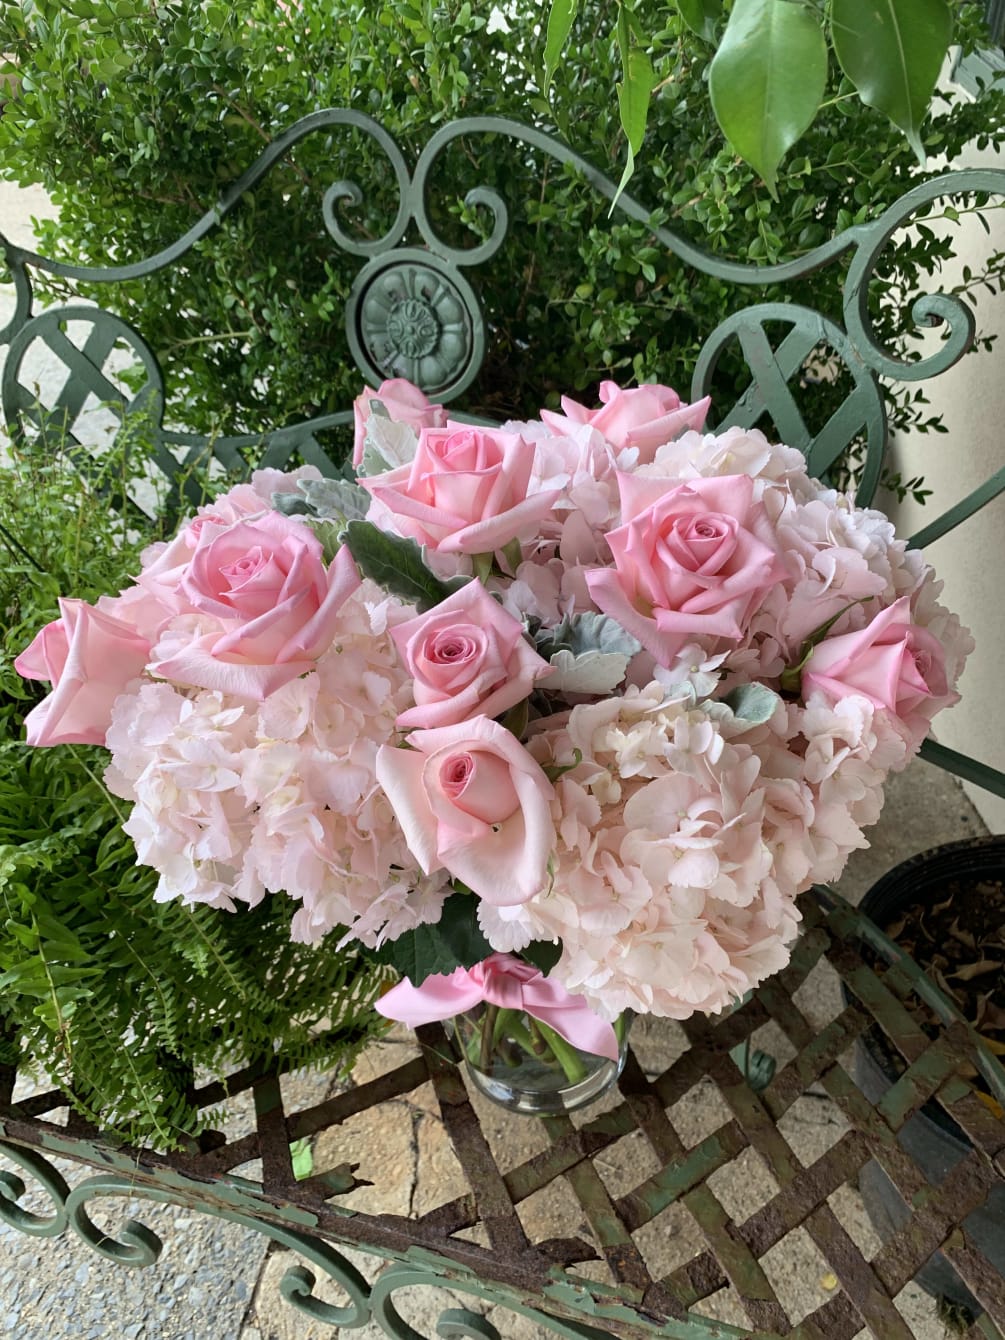 Quintessential garden arrangement
Pretty pin roses &amp; pink hydrangeas